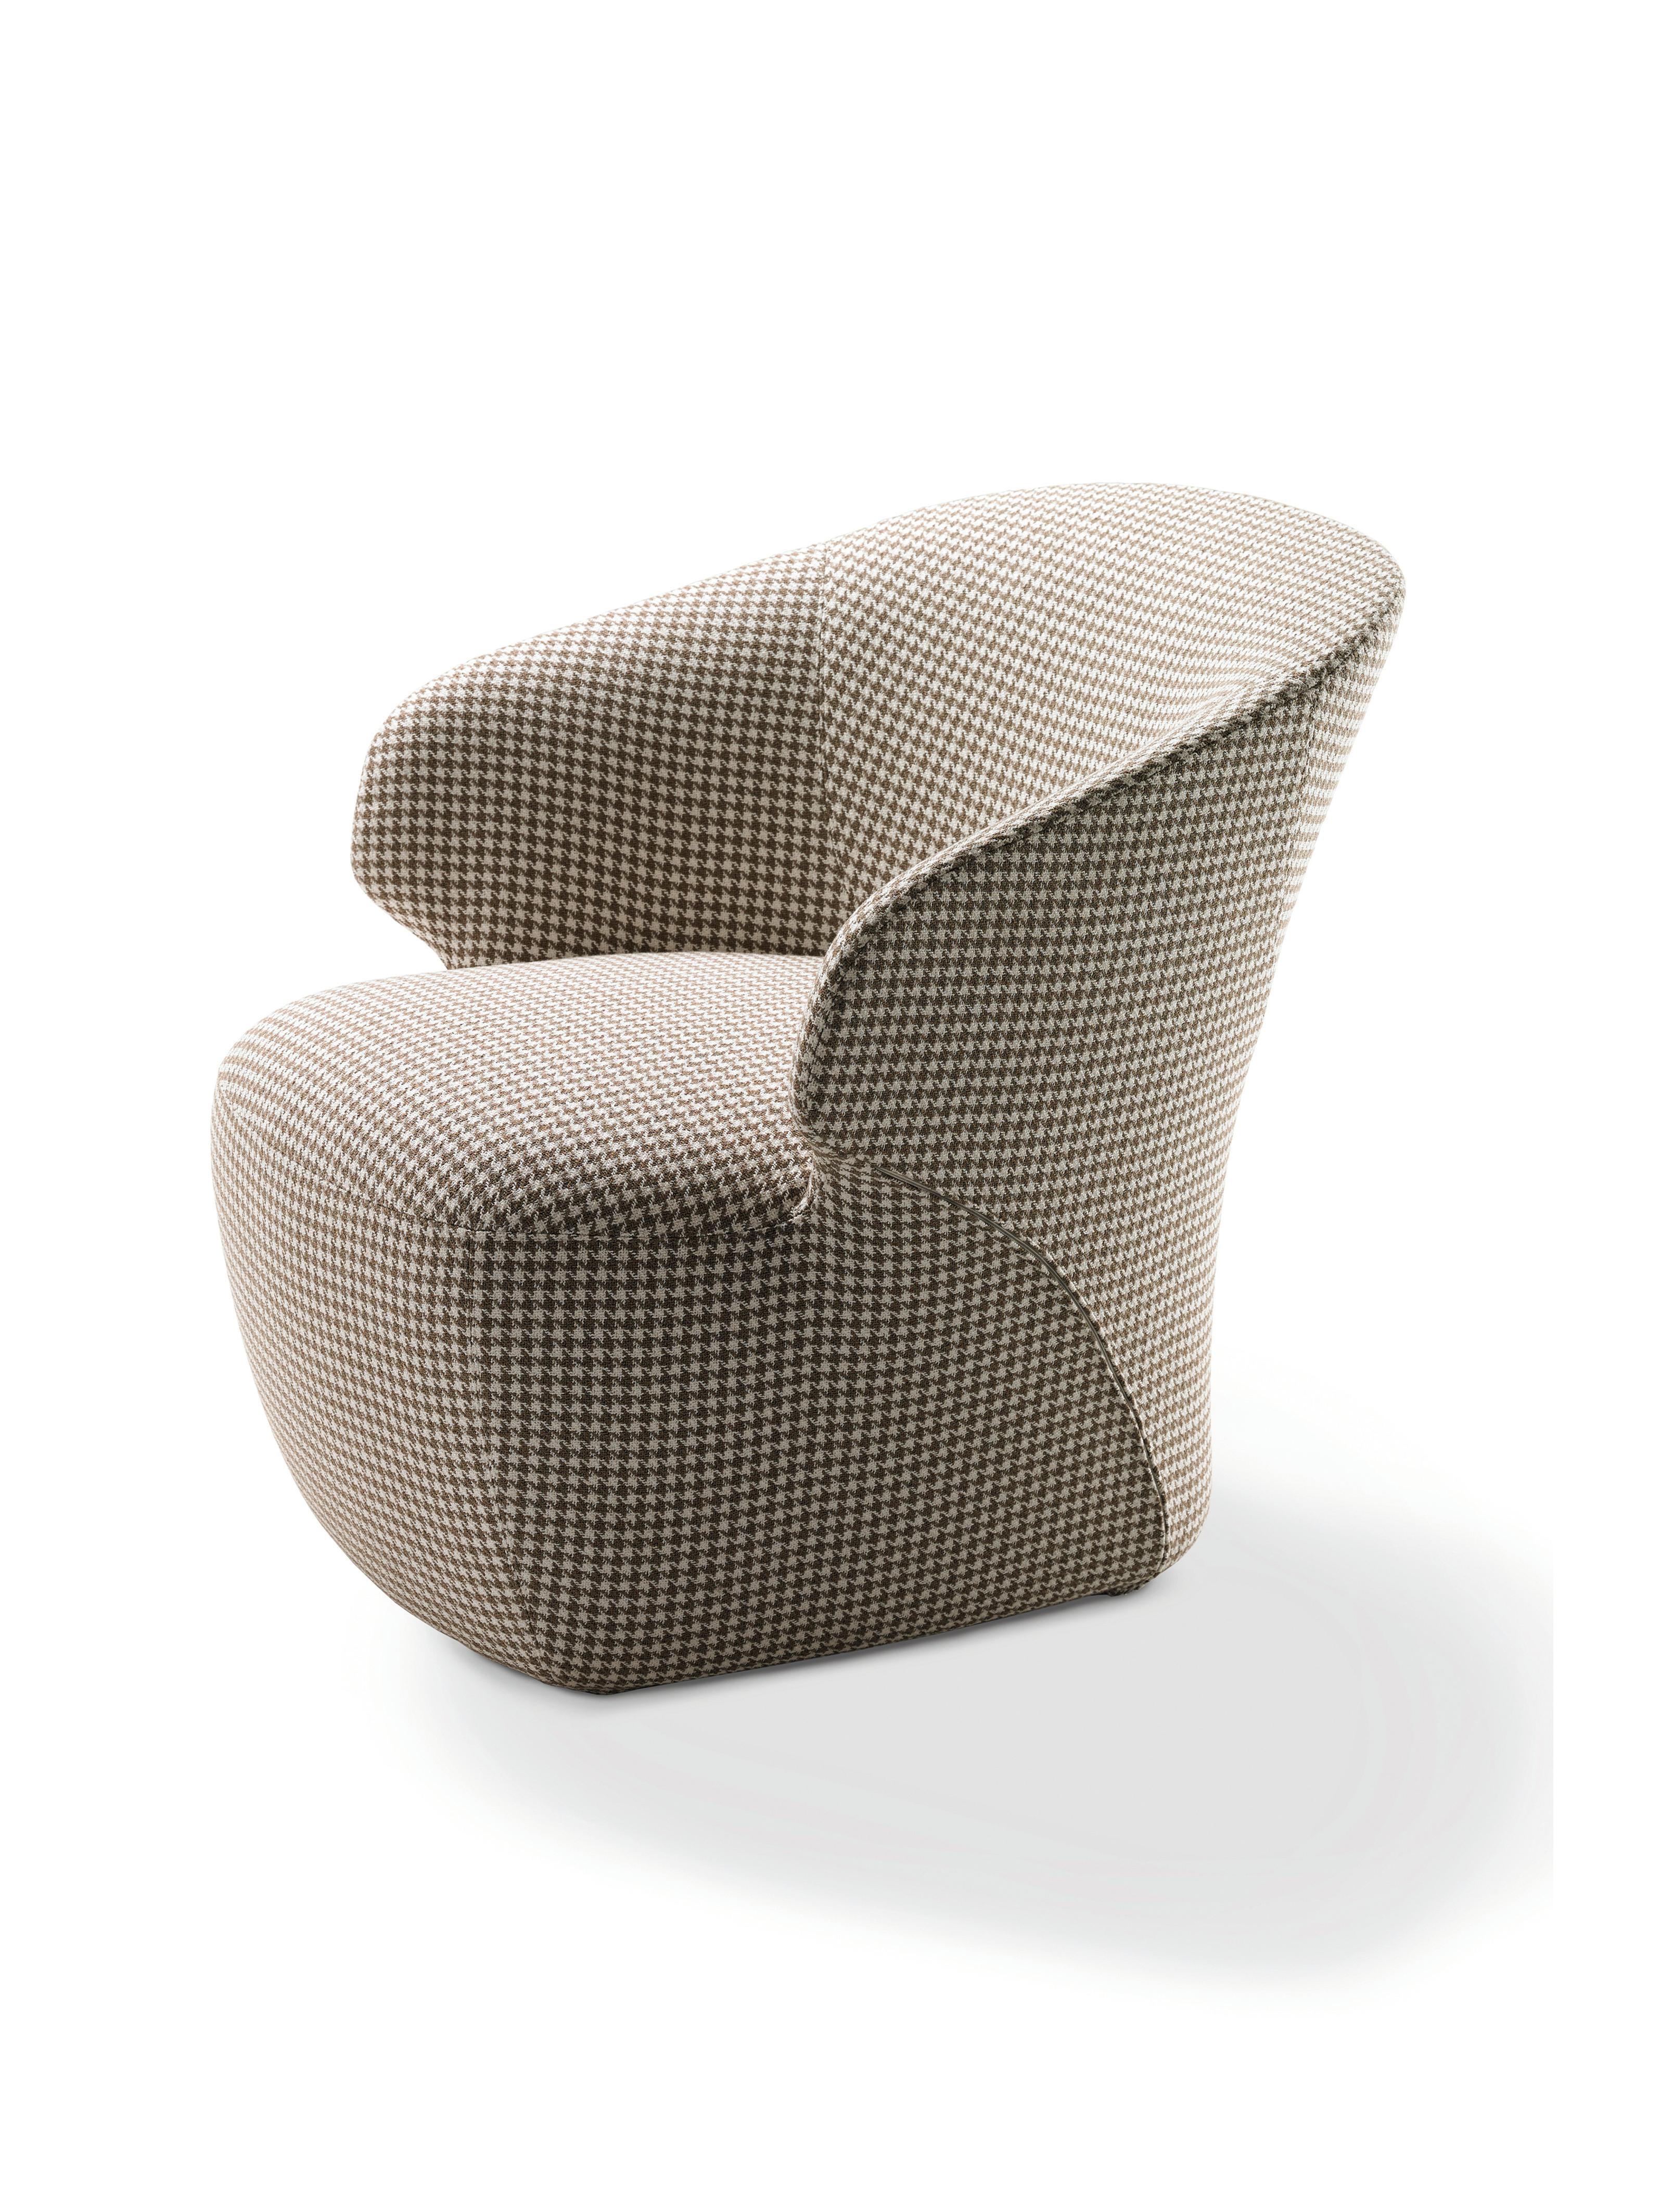 Customizable Zanotta Arom Chair Designed by Noé Duchaufour Lawrance For Sale 1